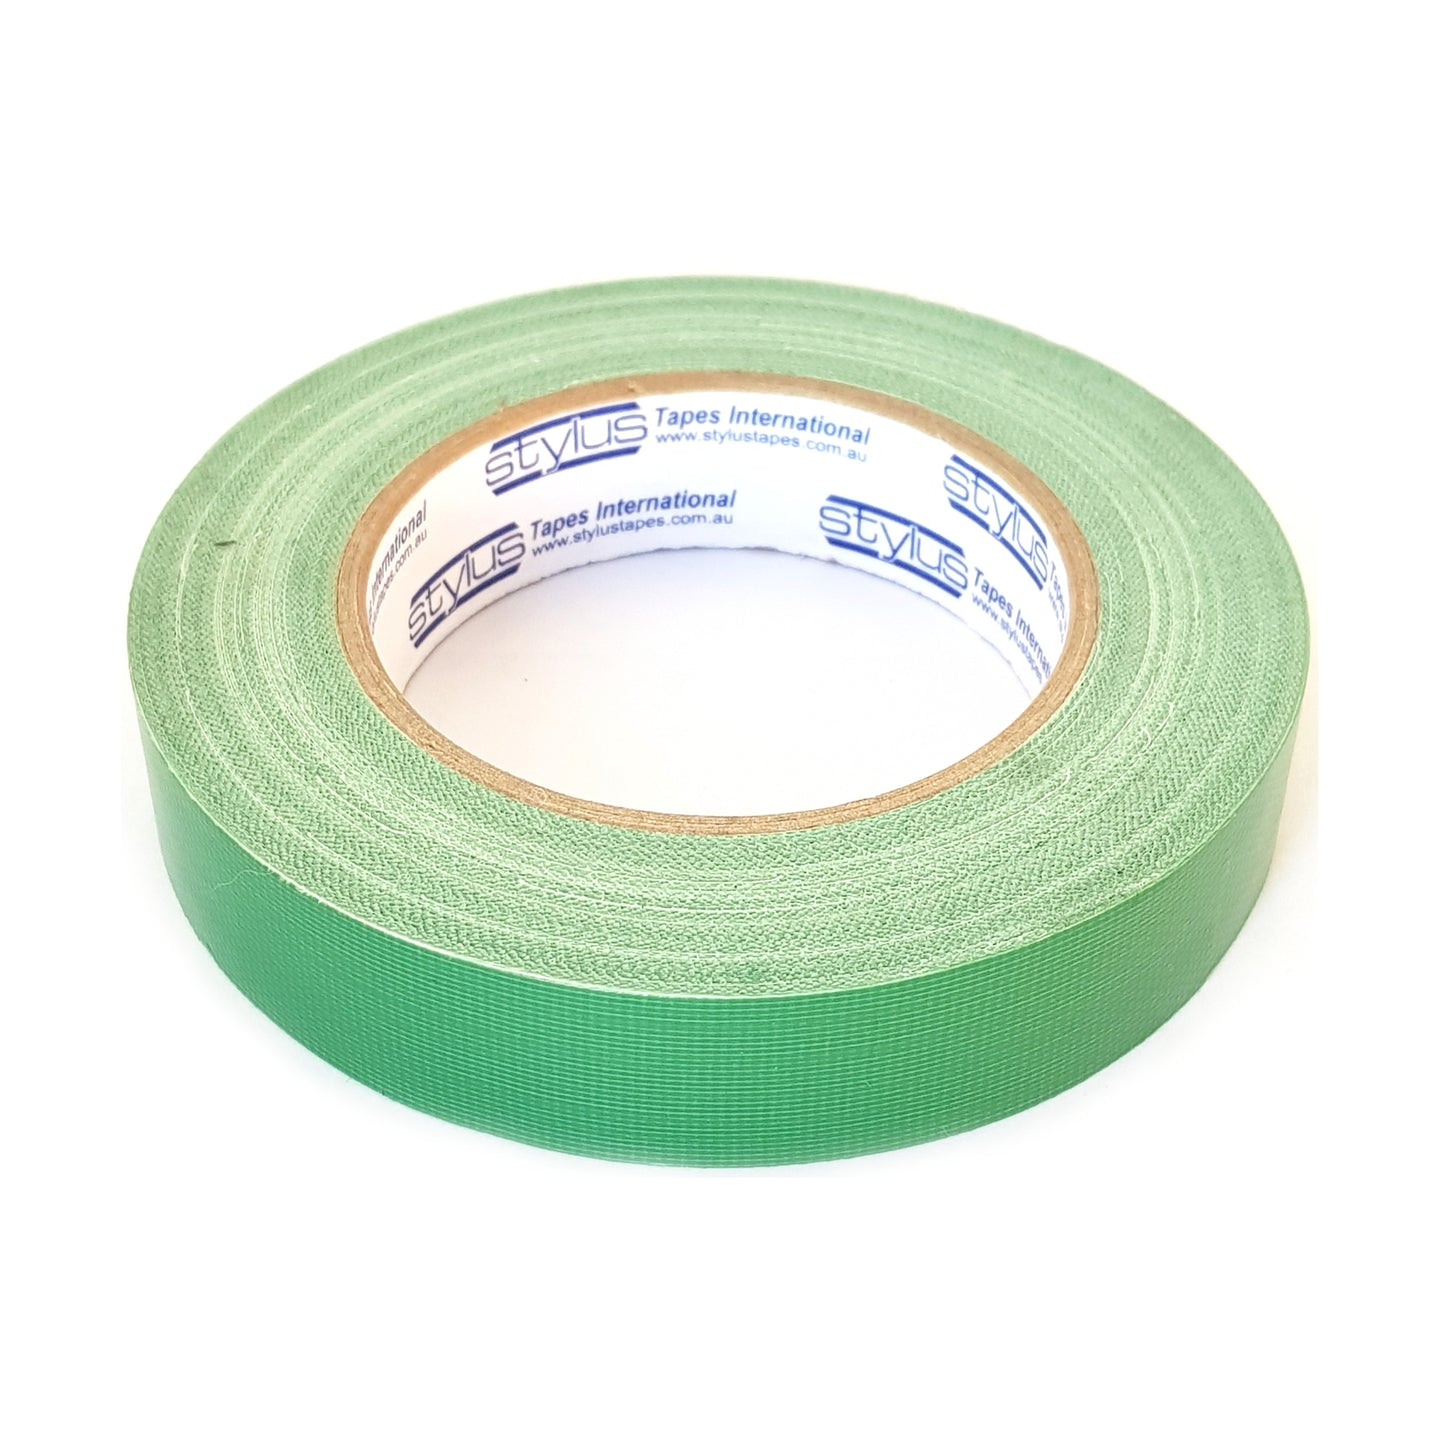 Buy Stylus 370 General Purpose Gaffer Tape Green | Topic Store